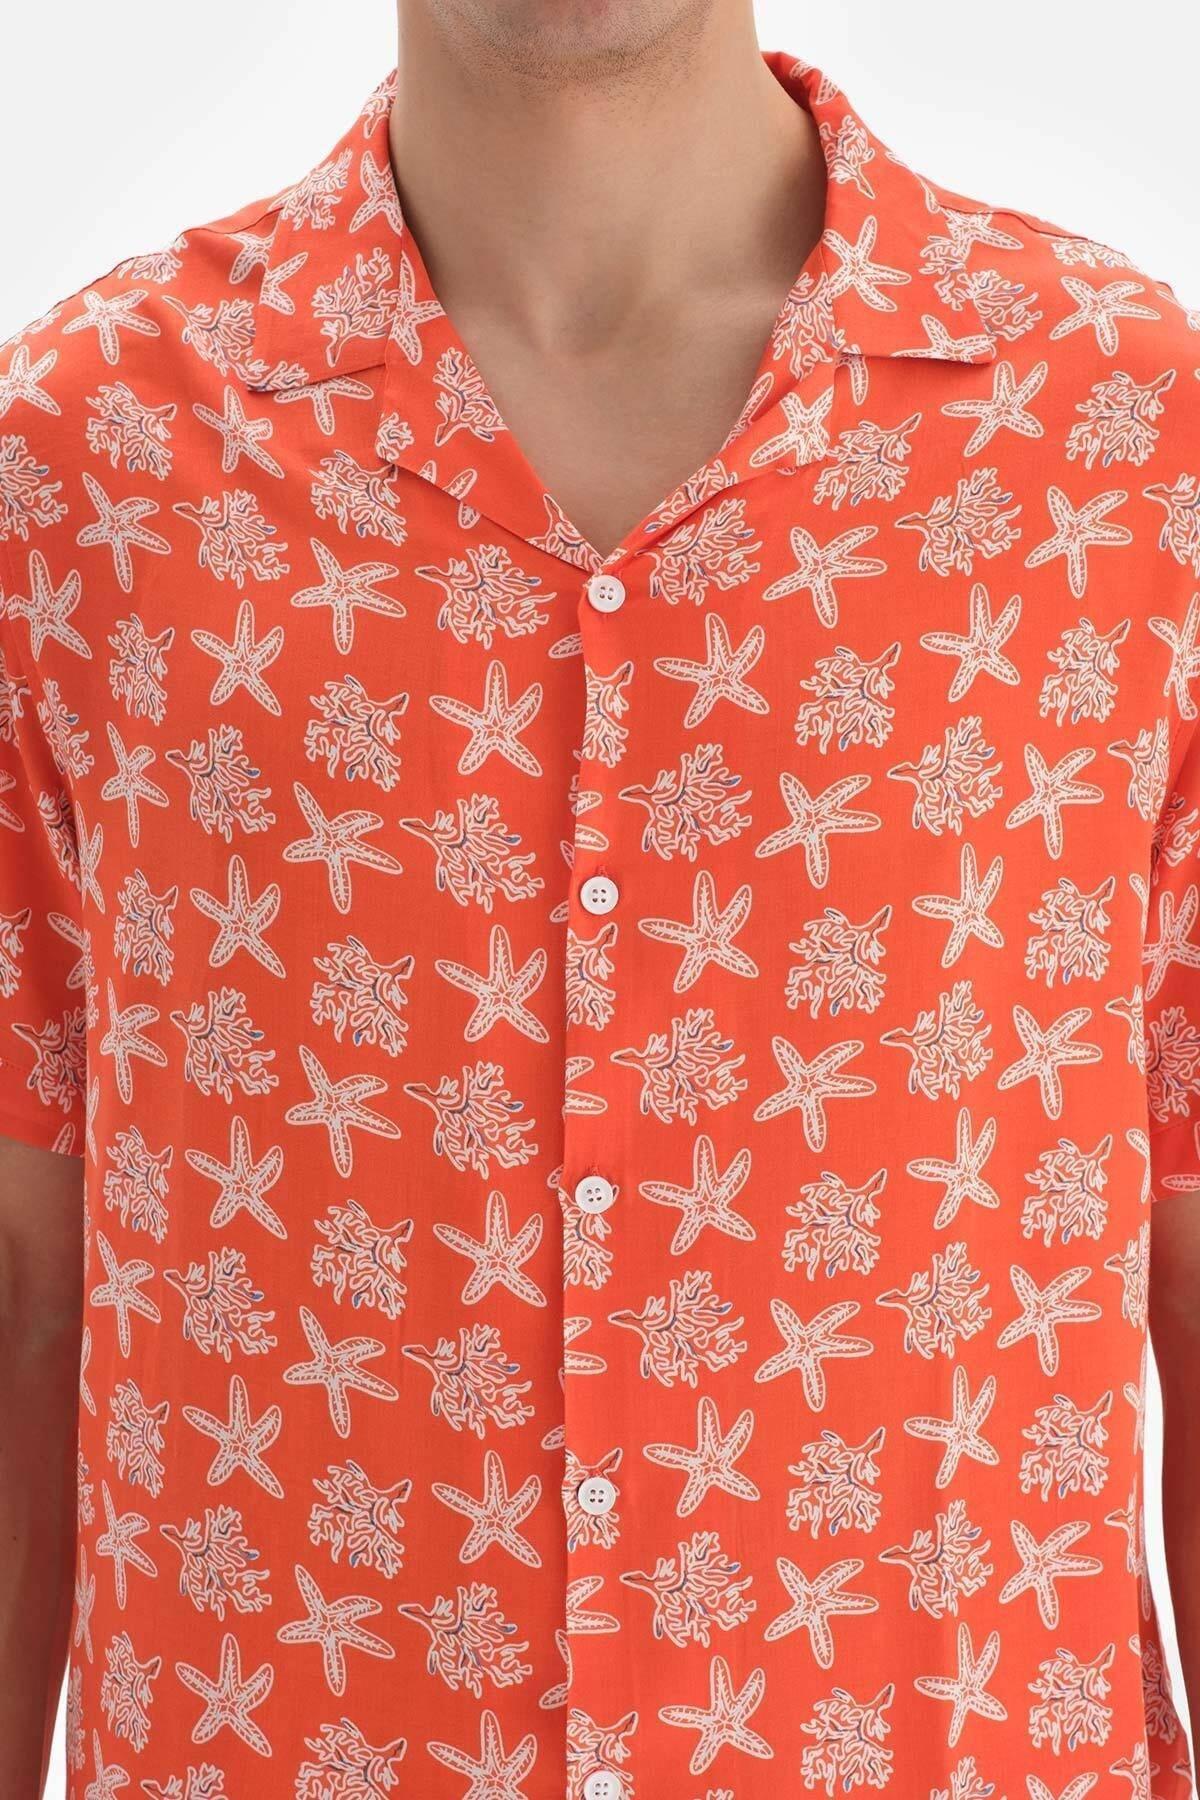 Dagi - Orange Printed Short Sleeves Shirts